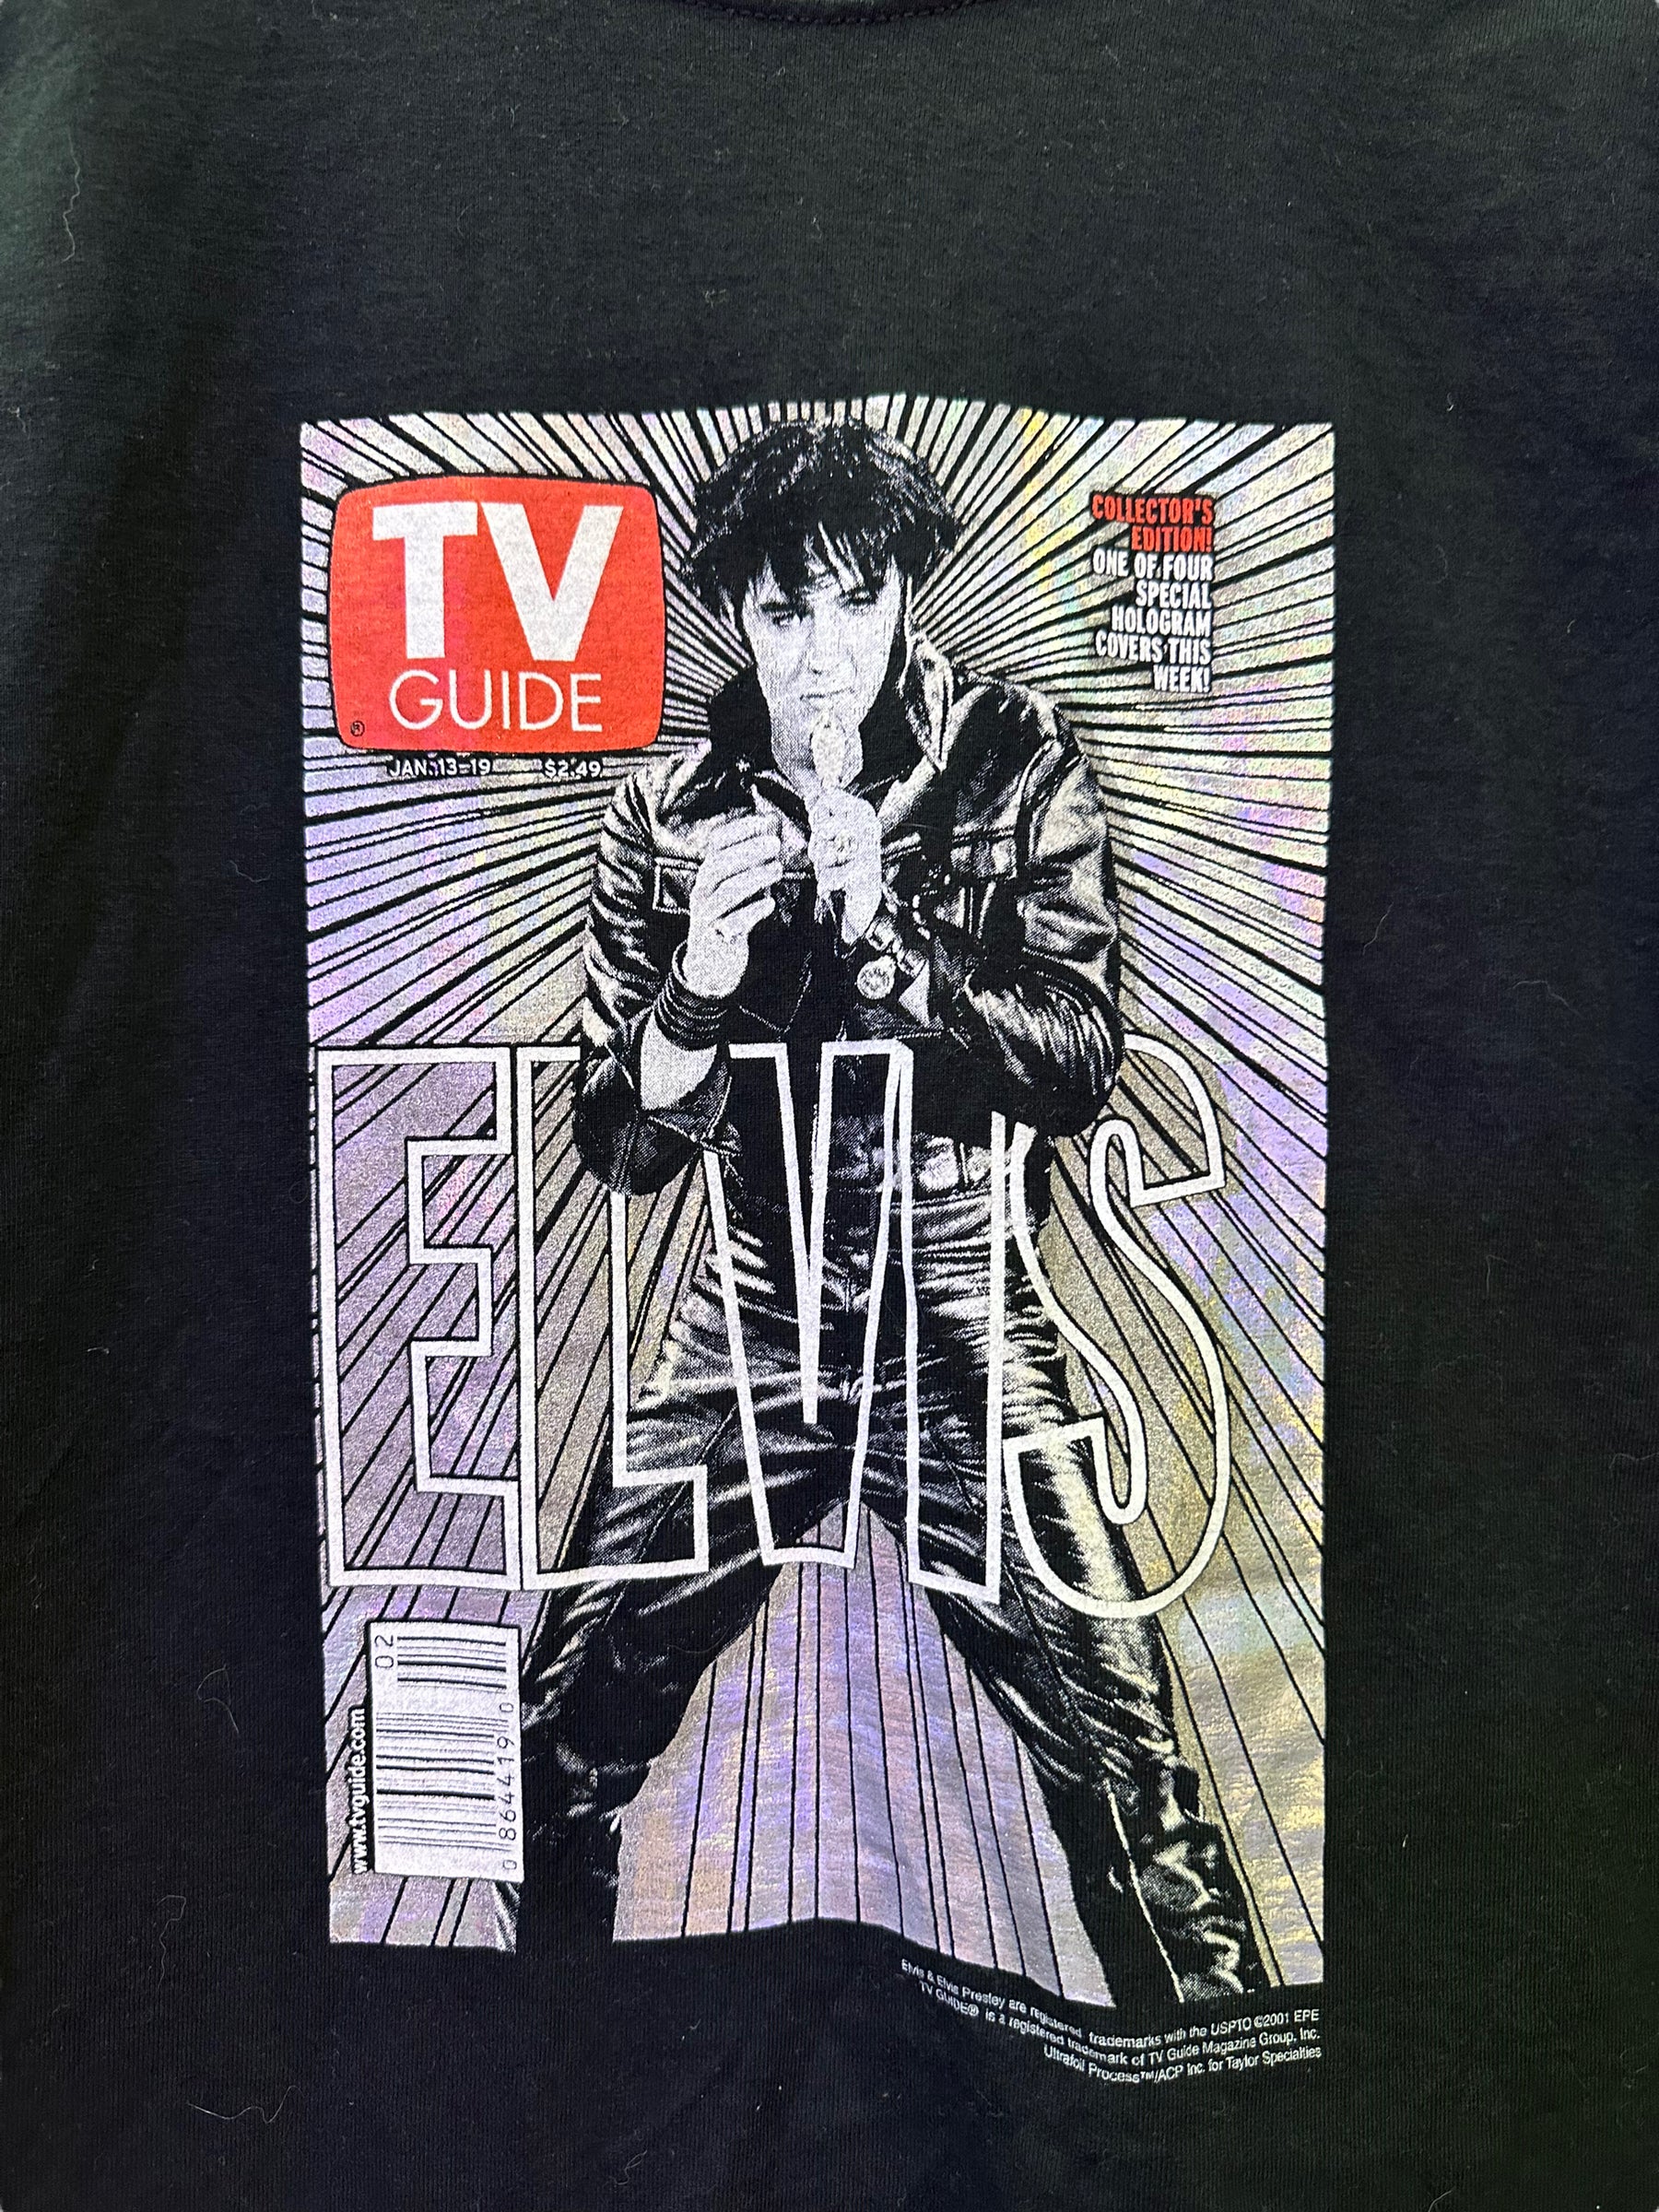 Vintage Elvis Presley T-Shirt